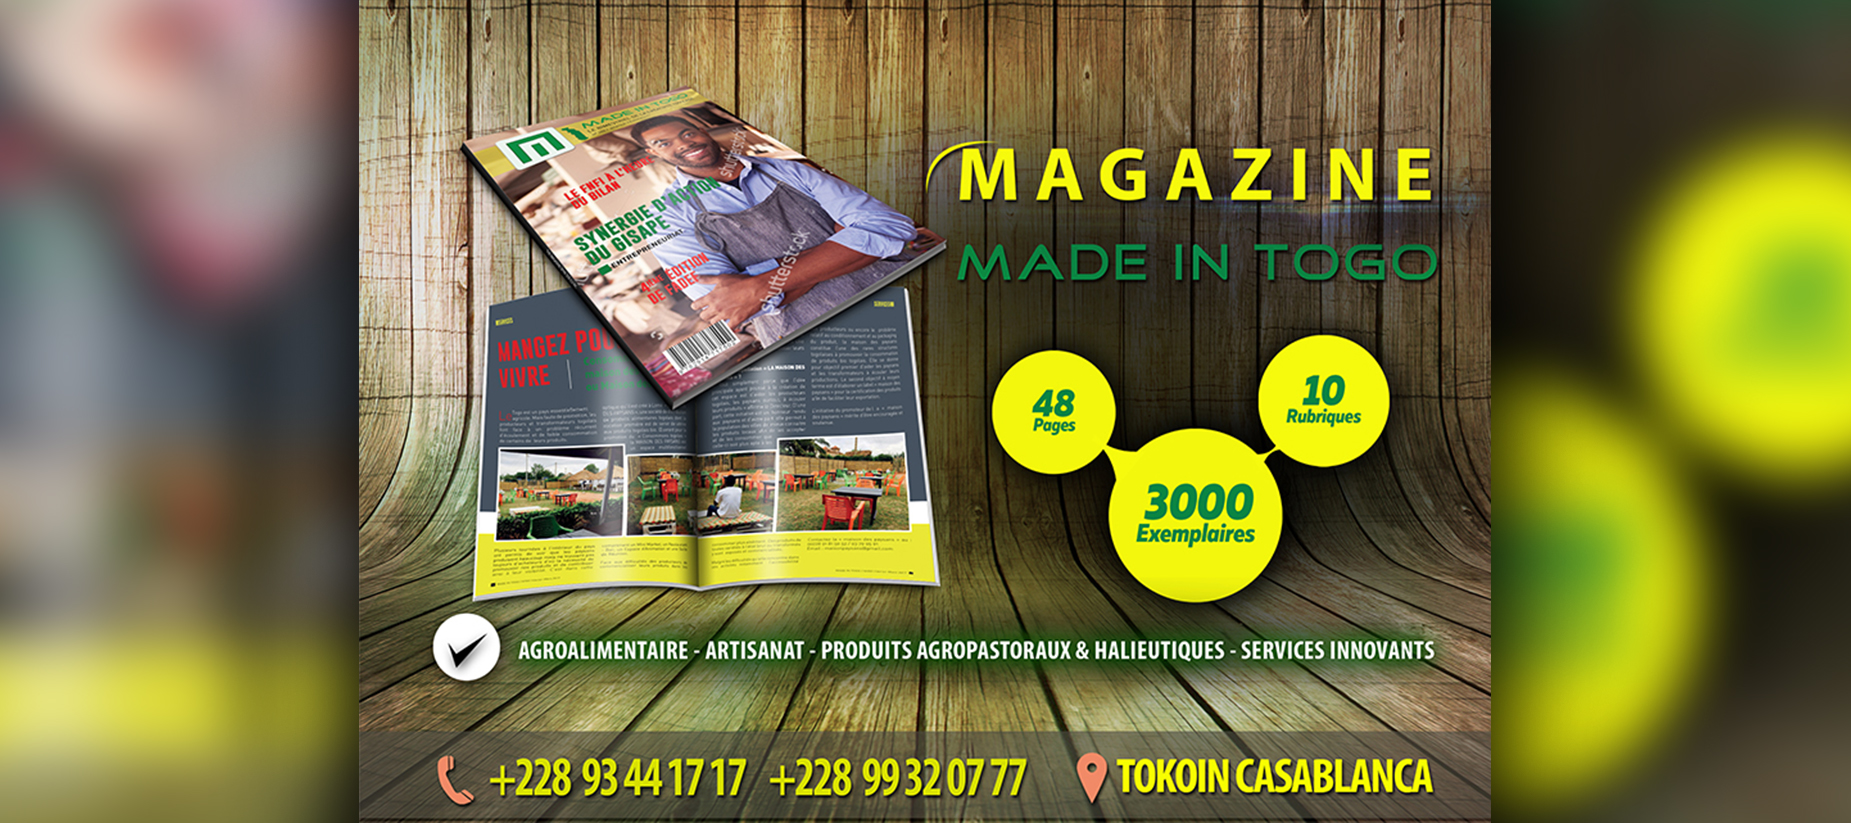  Le Magazine "Made in Togo"